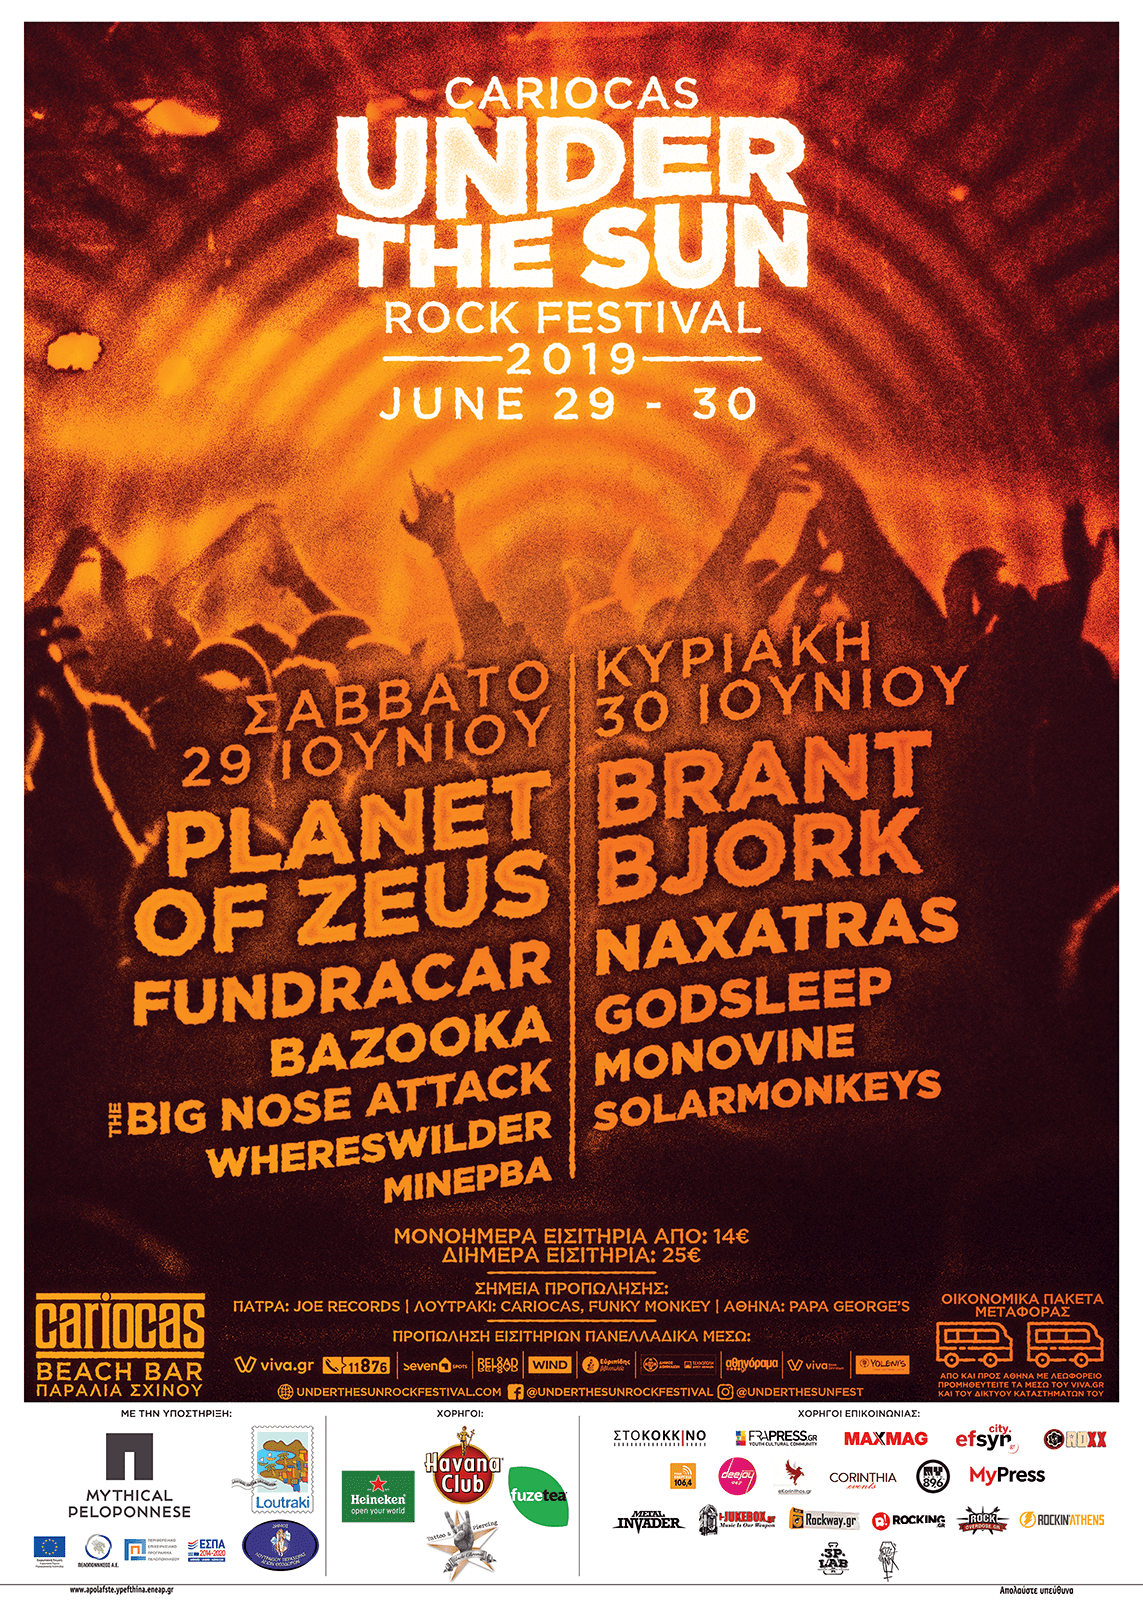 Under The Sun Rock Festival 2019